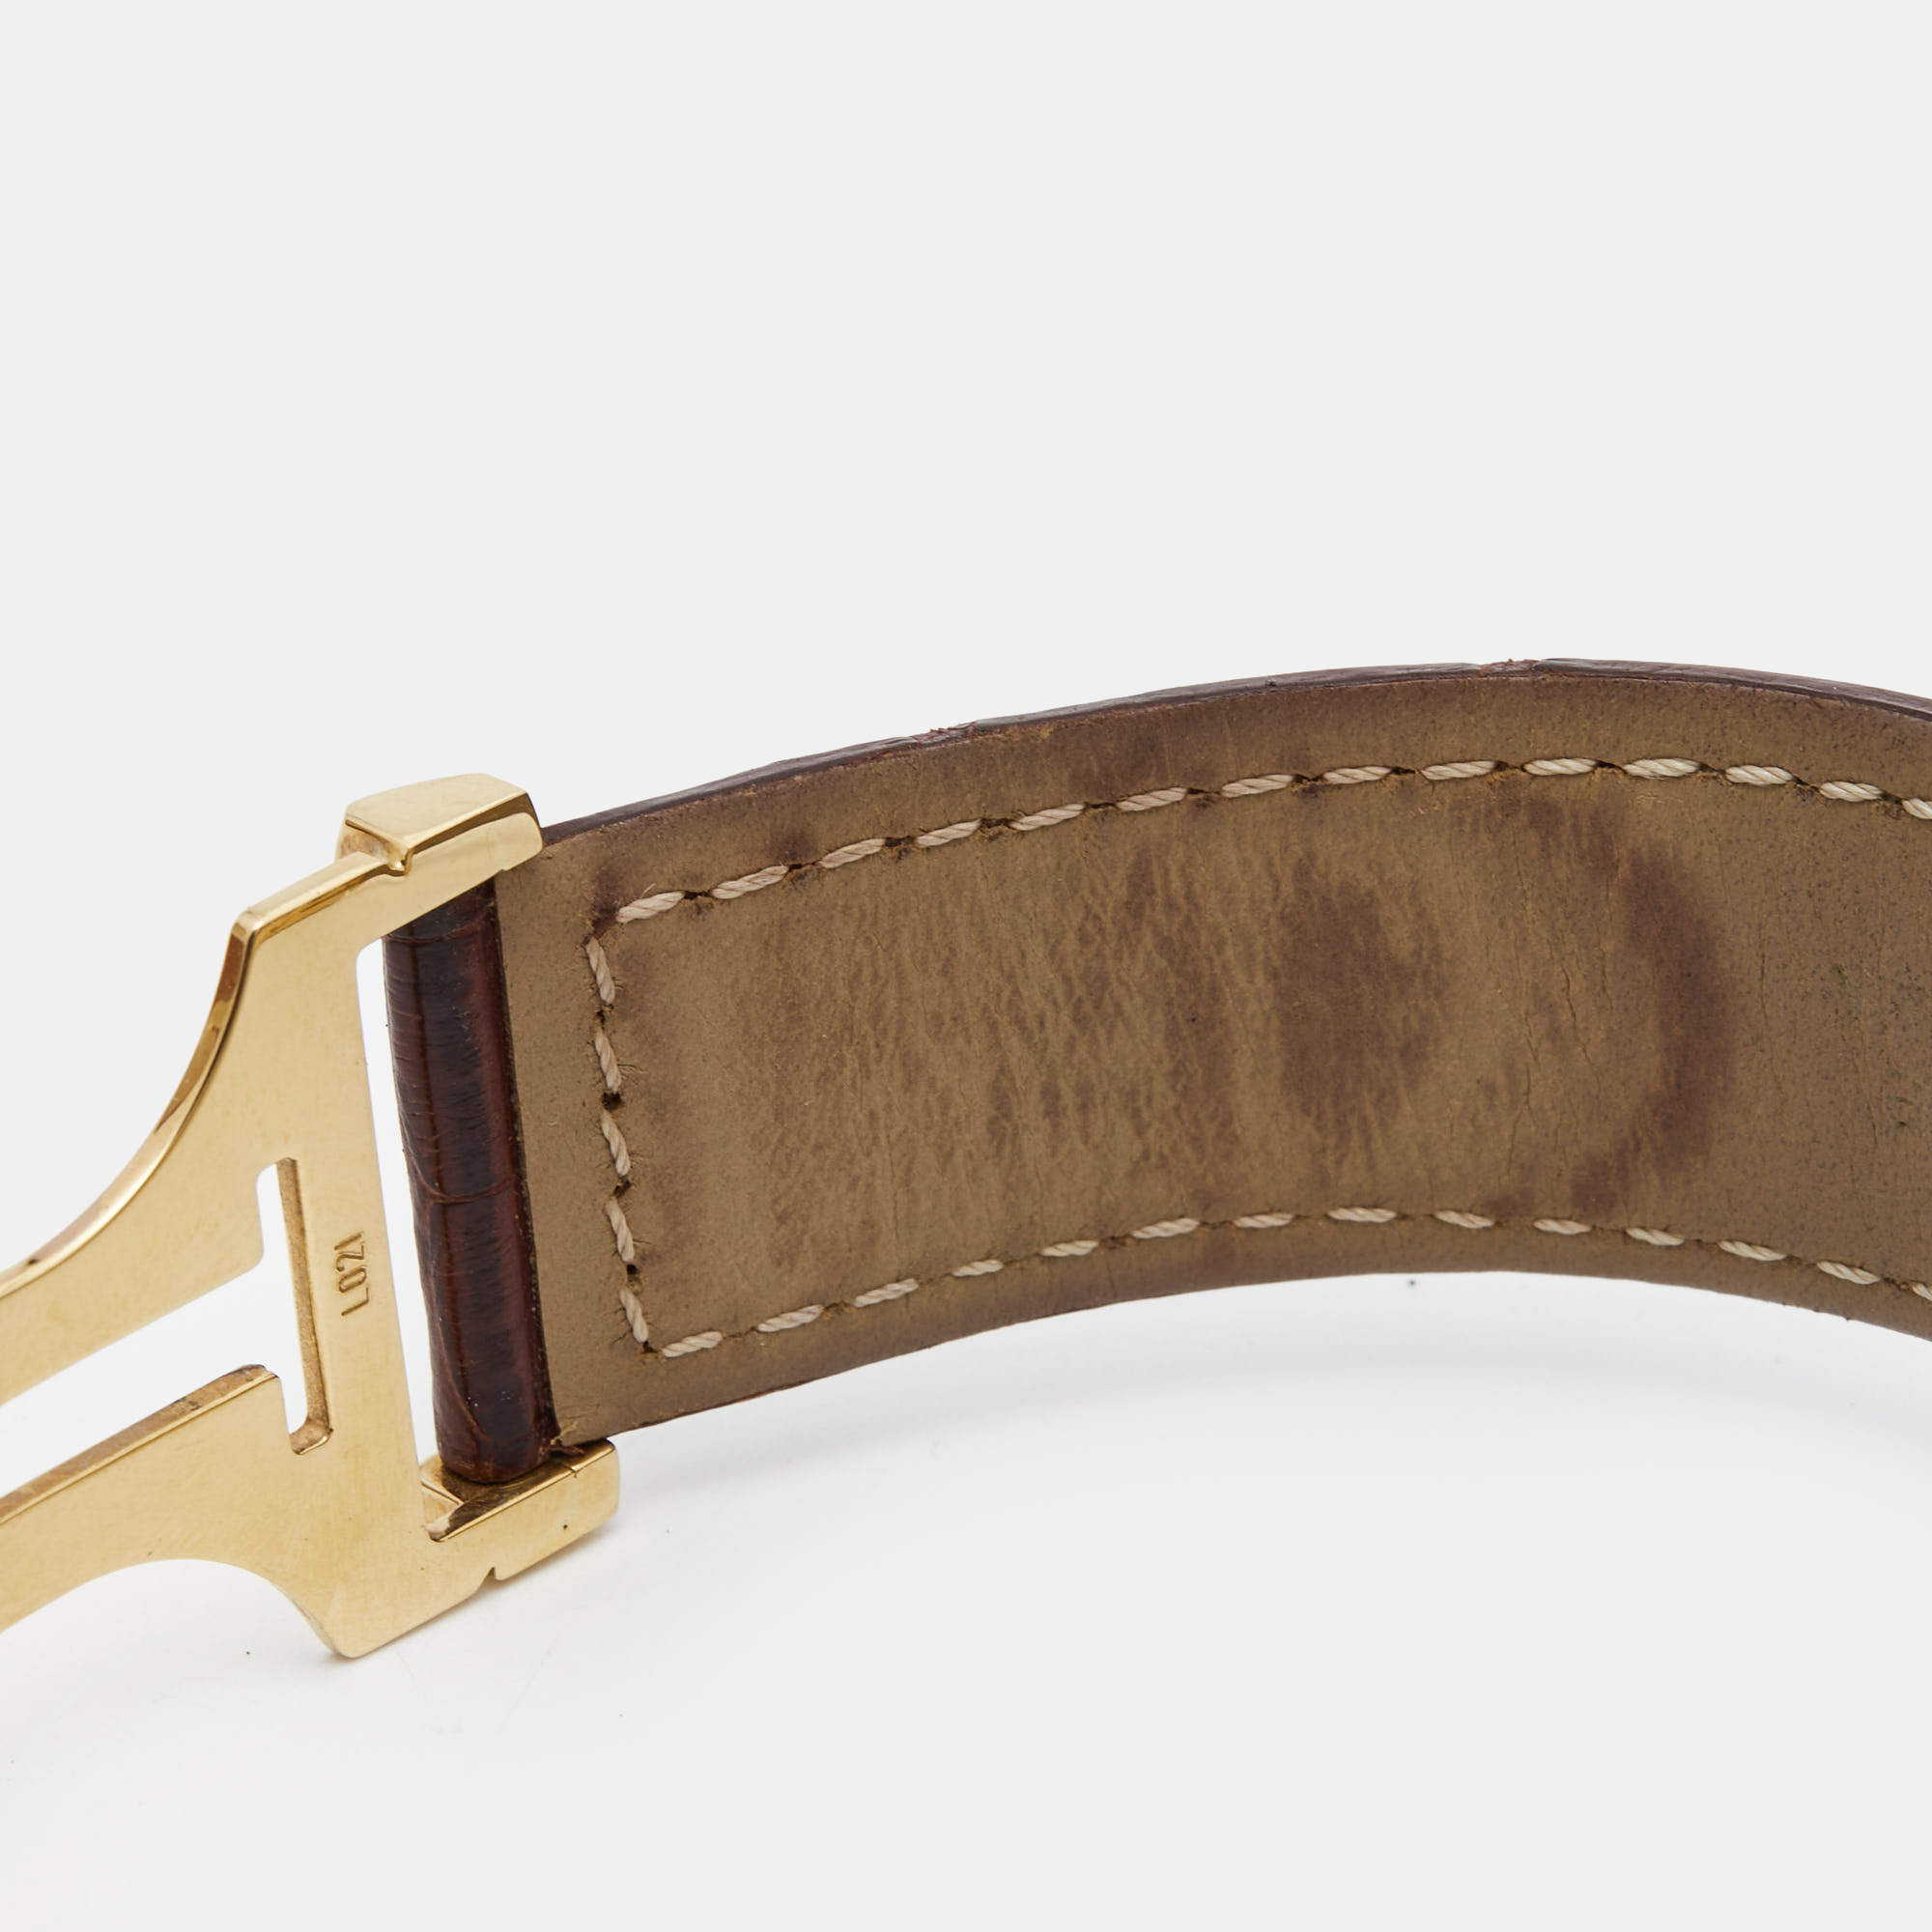 Ebel Silver 18K Yellow Gold Alligator Leather Brasilia 1215618 Men's Wristwatch 32.50 Mm